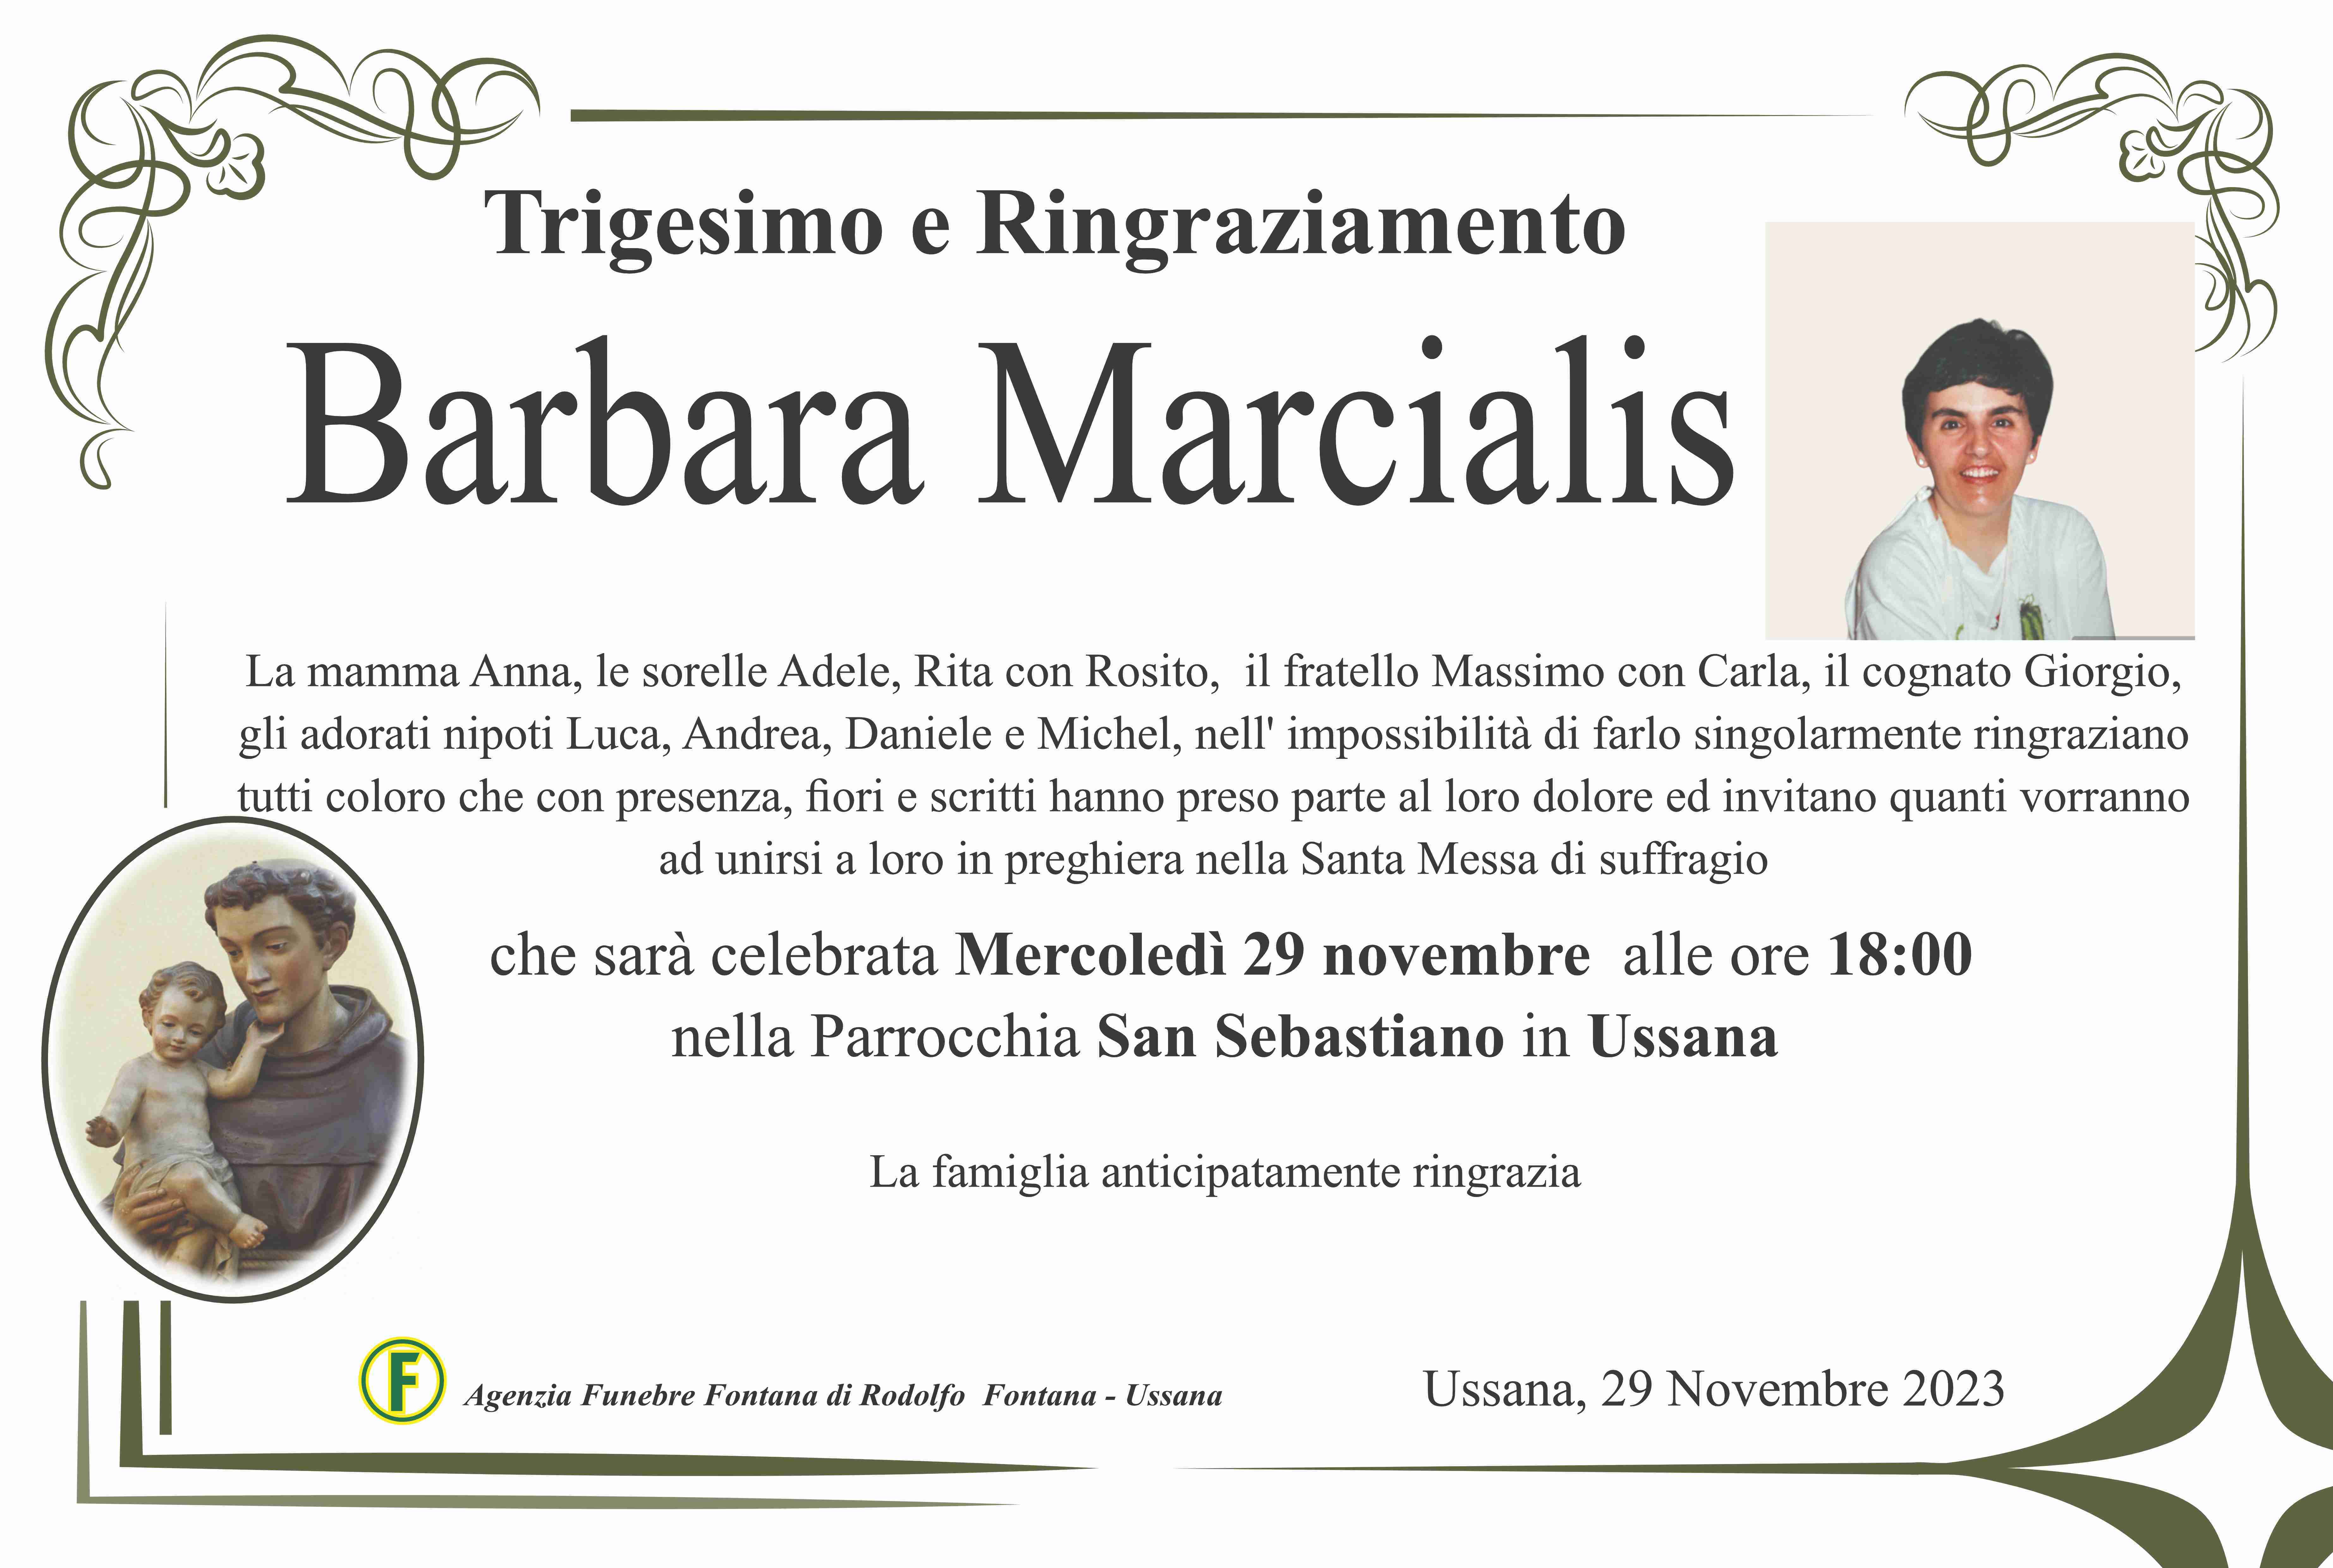 Barbara Marcialis